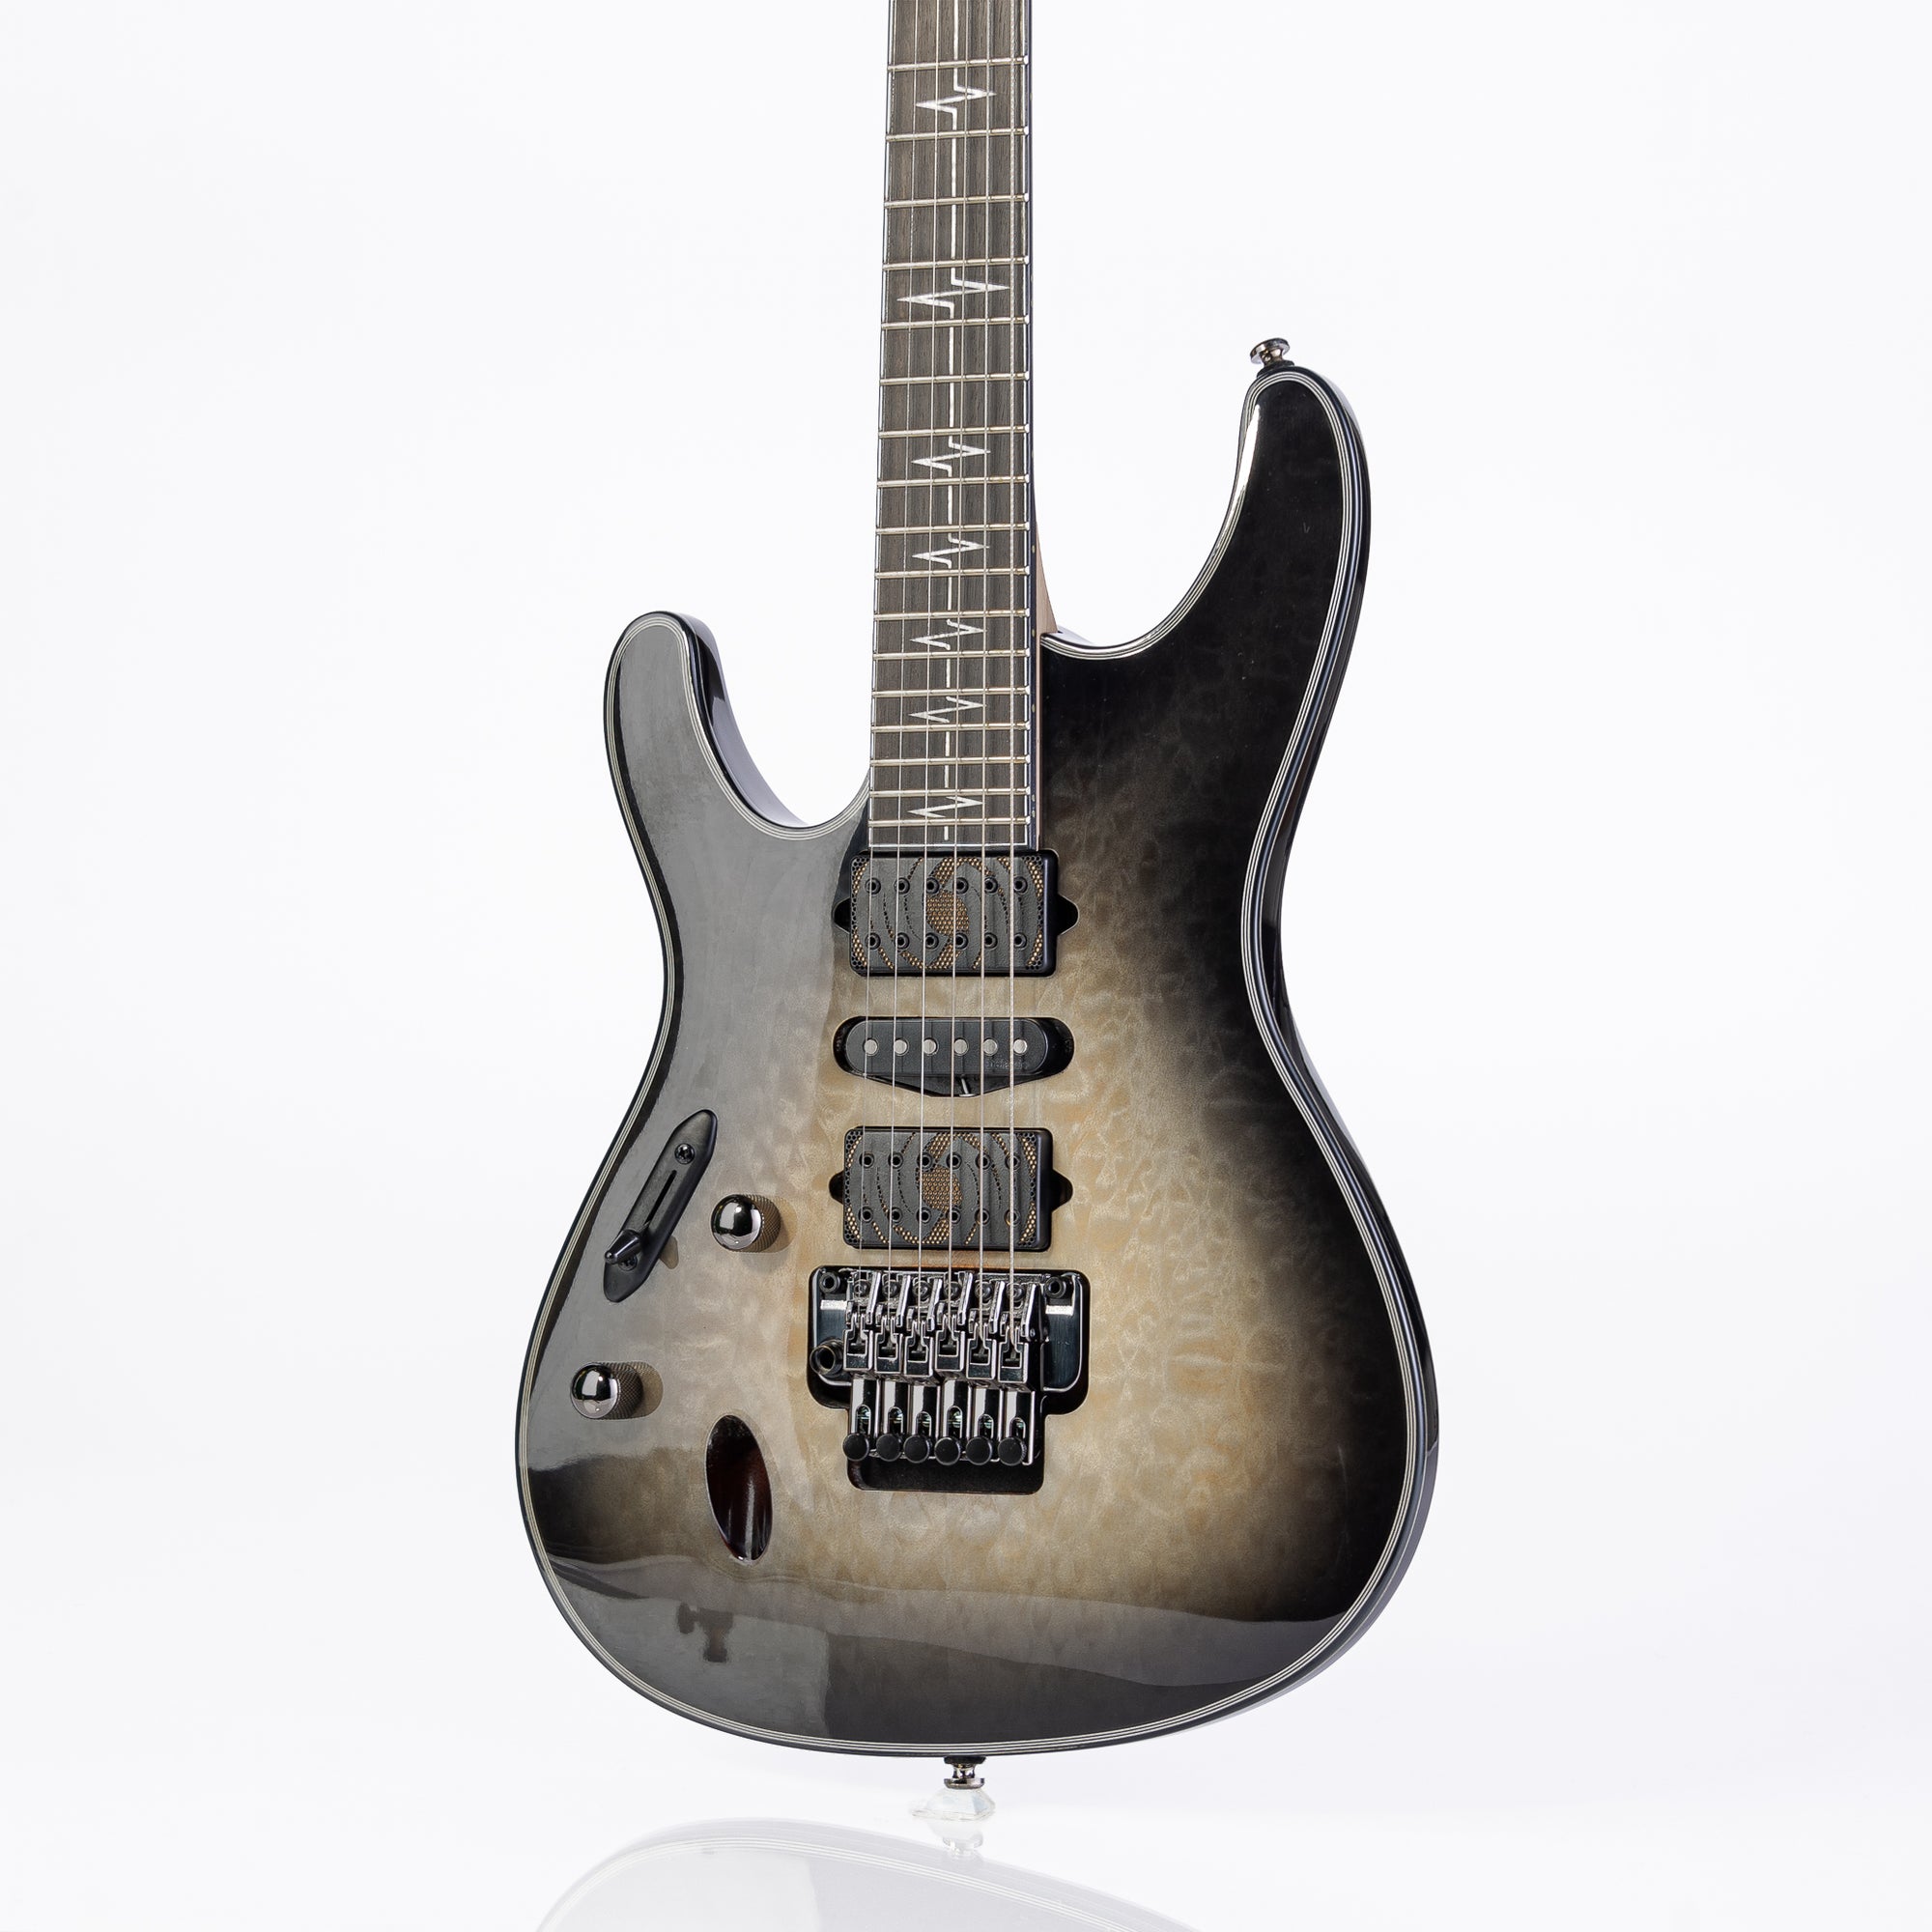 Ibanez JIVA10 Left Handed Nita Strouse Signature Electric Guitar - Deep Space Blonde